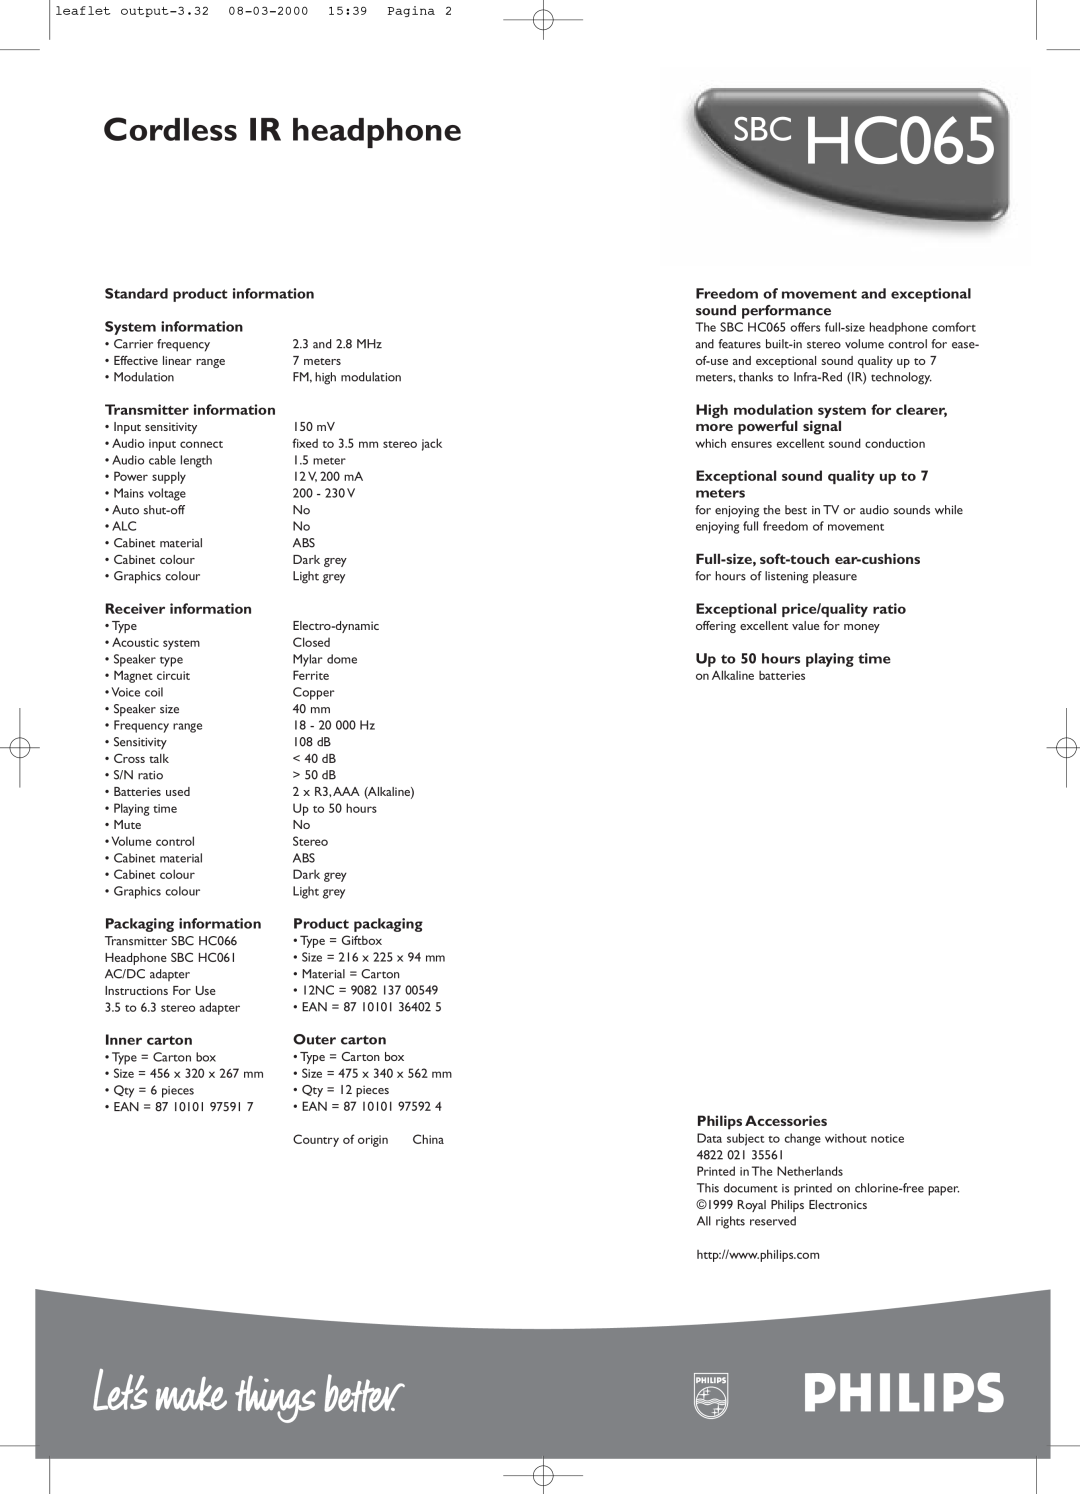 Philips SBC HC065 manual Cordless IR headphone 